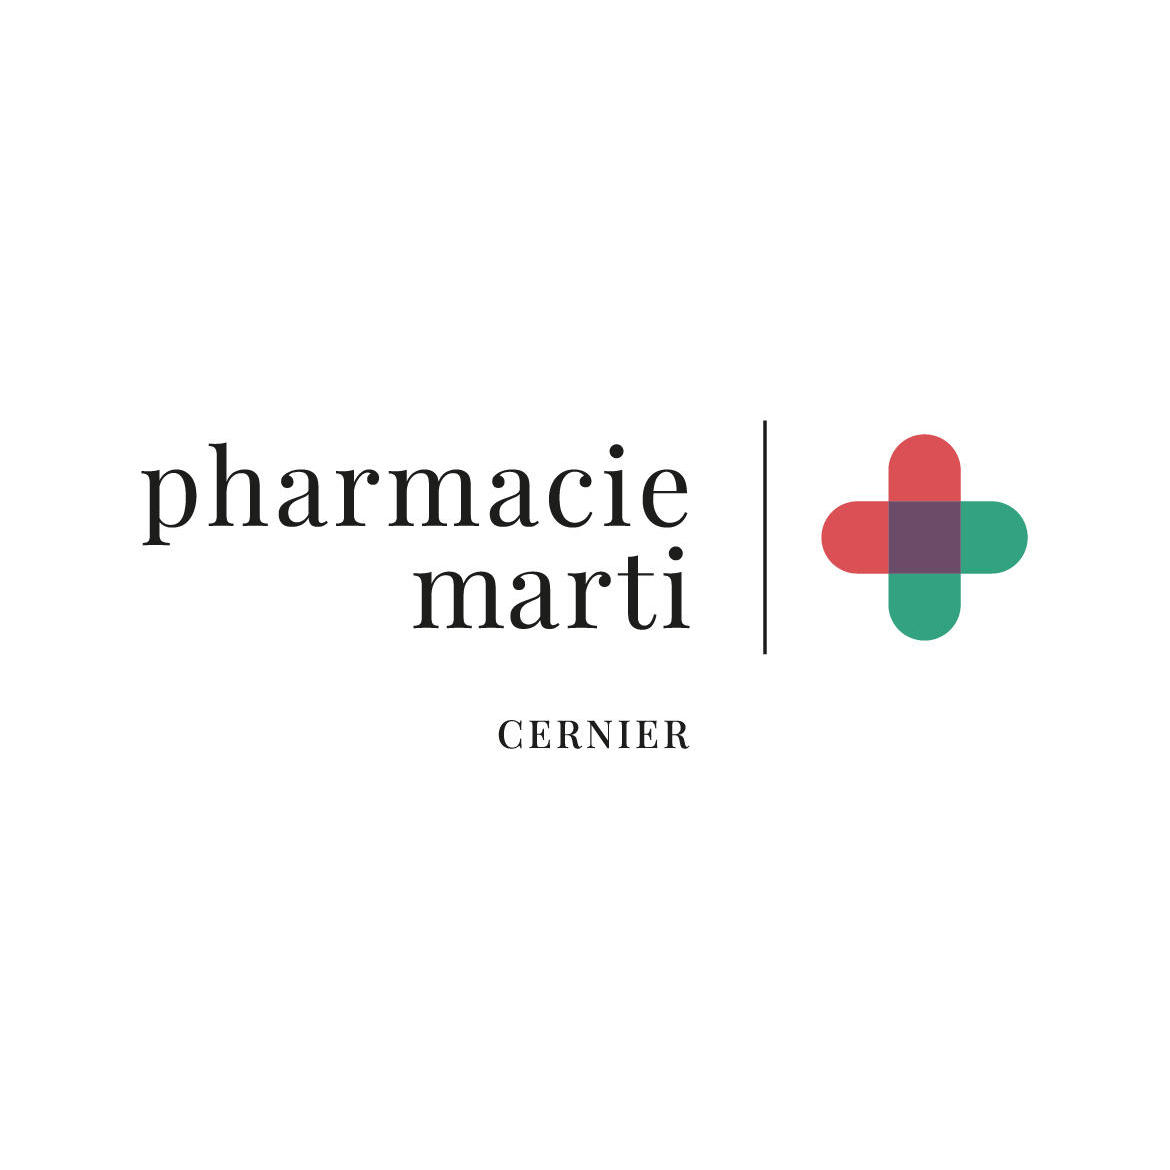 Pharmacie Marti | Cernier Logo